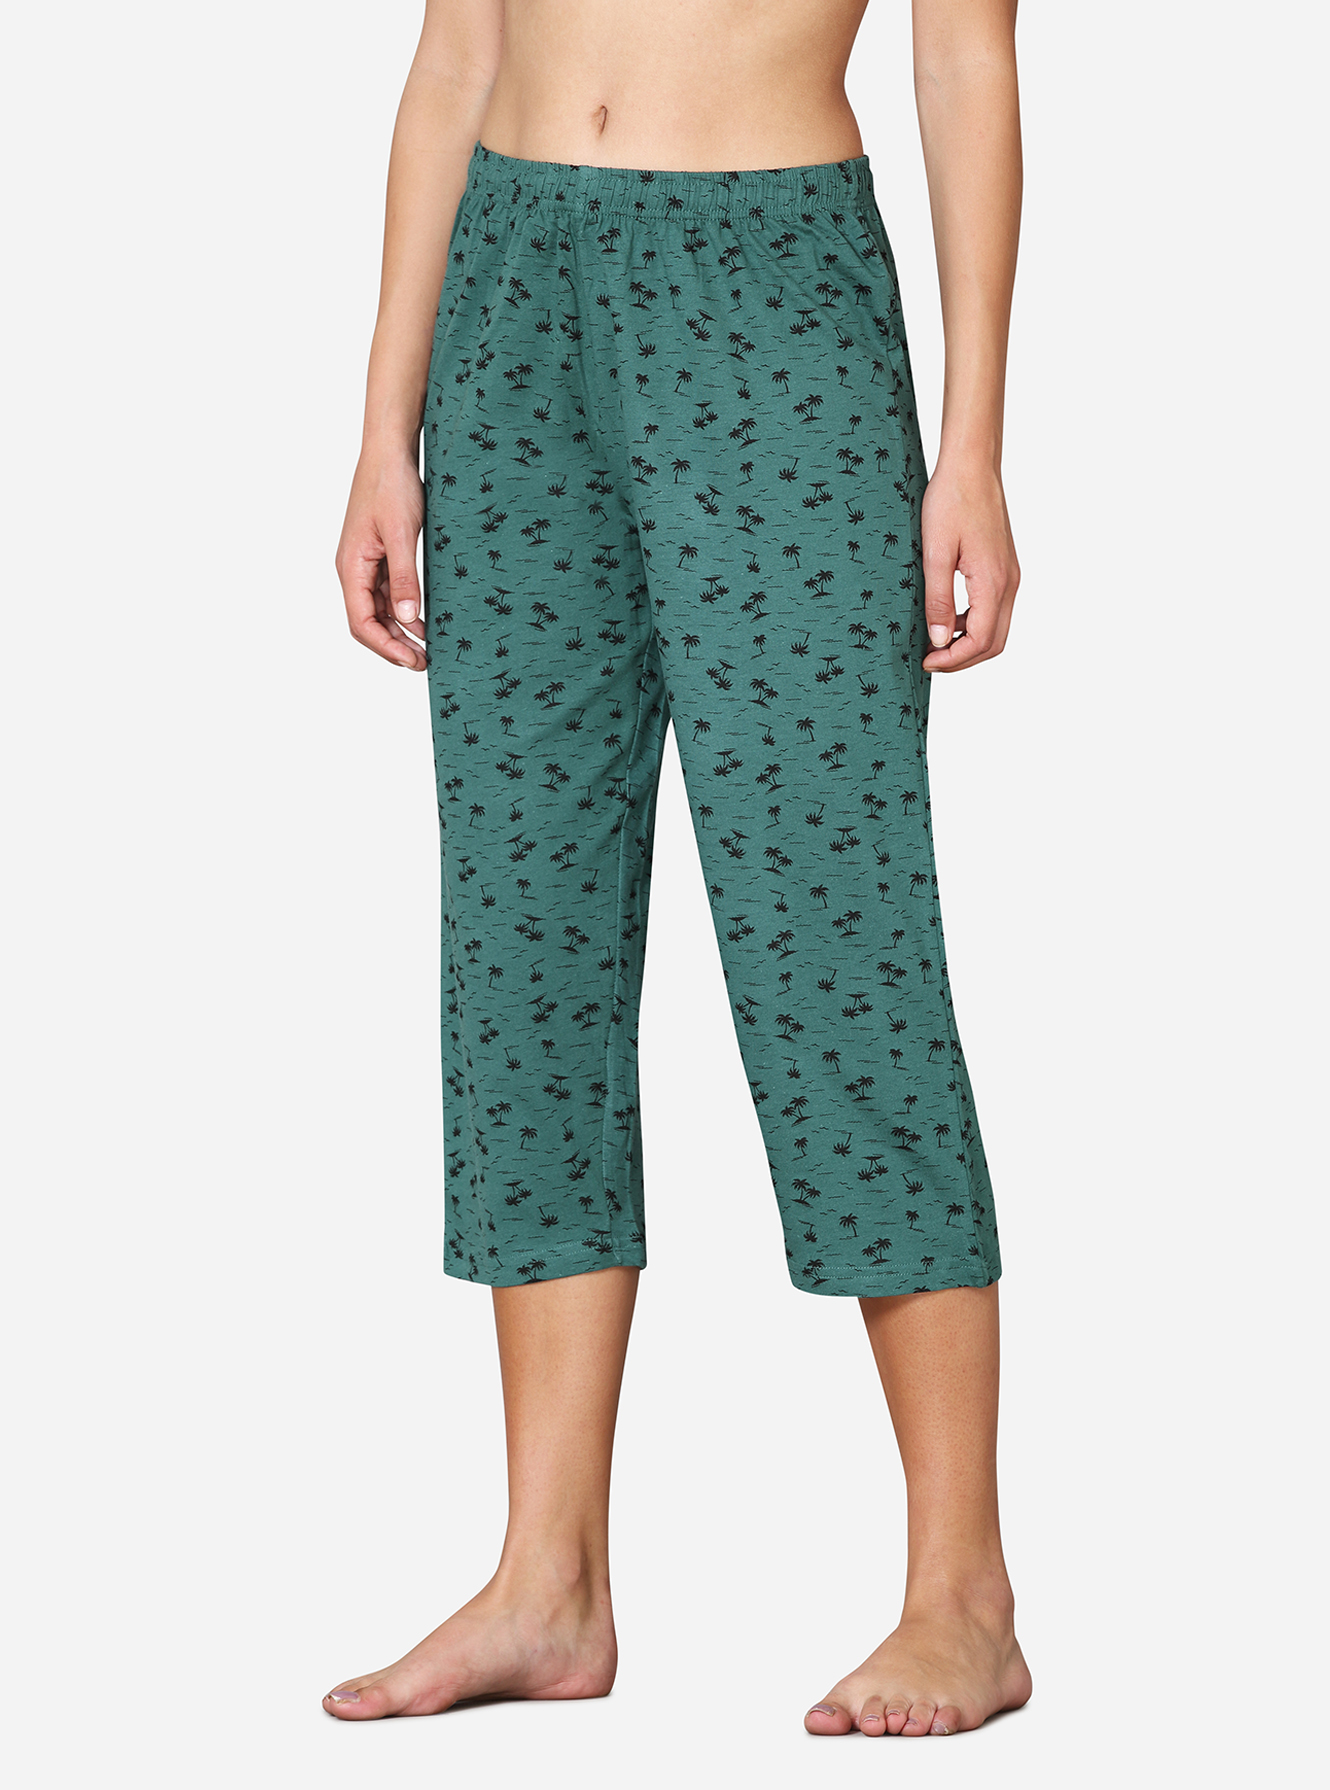 Plus Size Women's 2-Piece Capri PJ Set by Dreams & Co. in Classic Red  Winter Snow (Size 6X) Pajamas - Yahoo Shopping